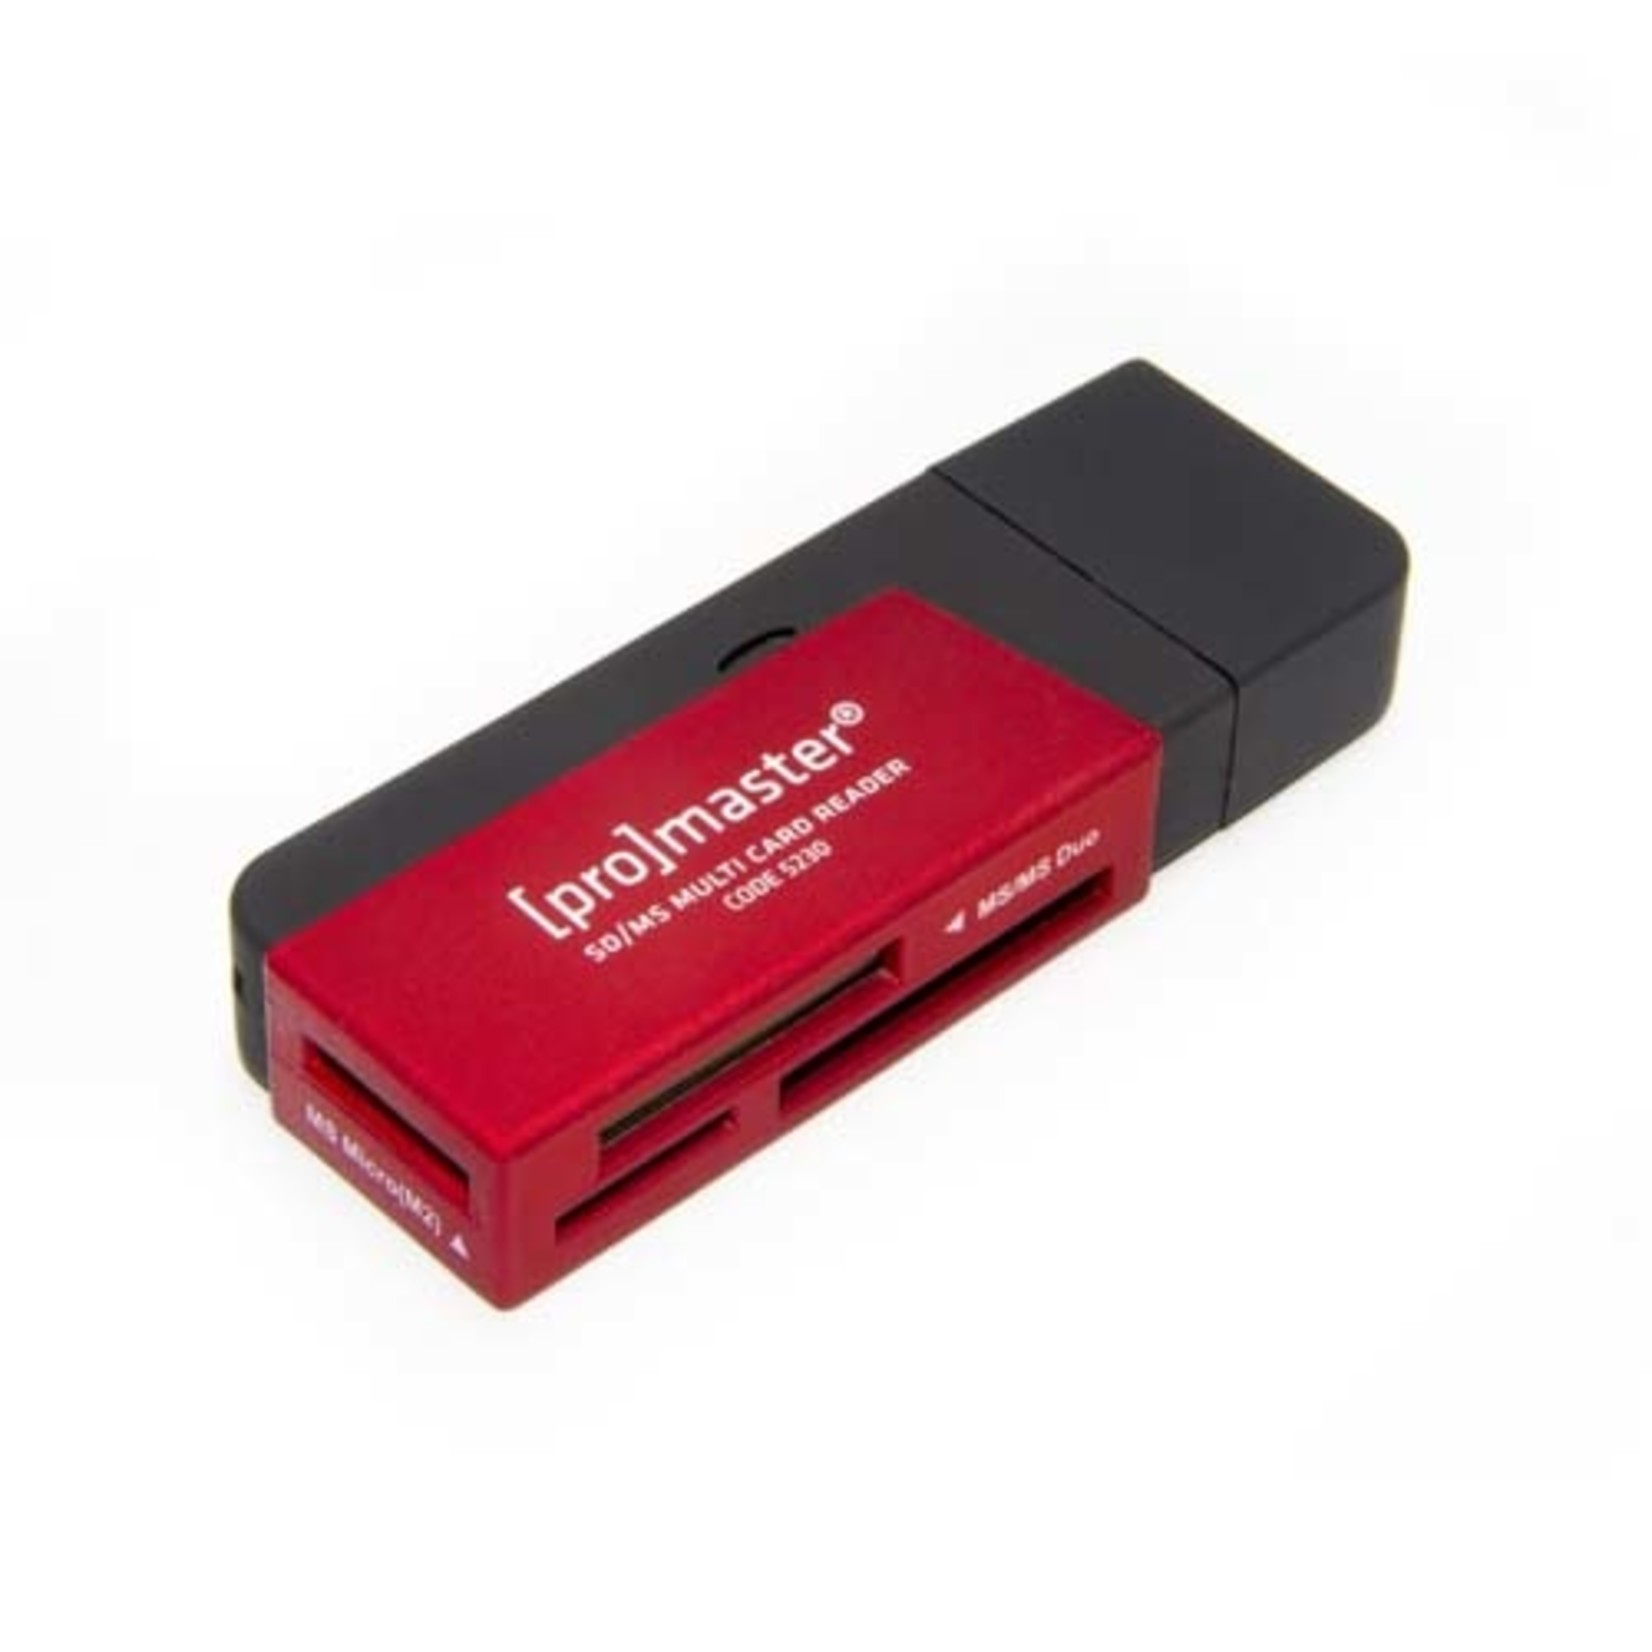 ProMaster SD Multi Card Reader